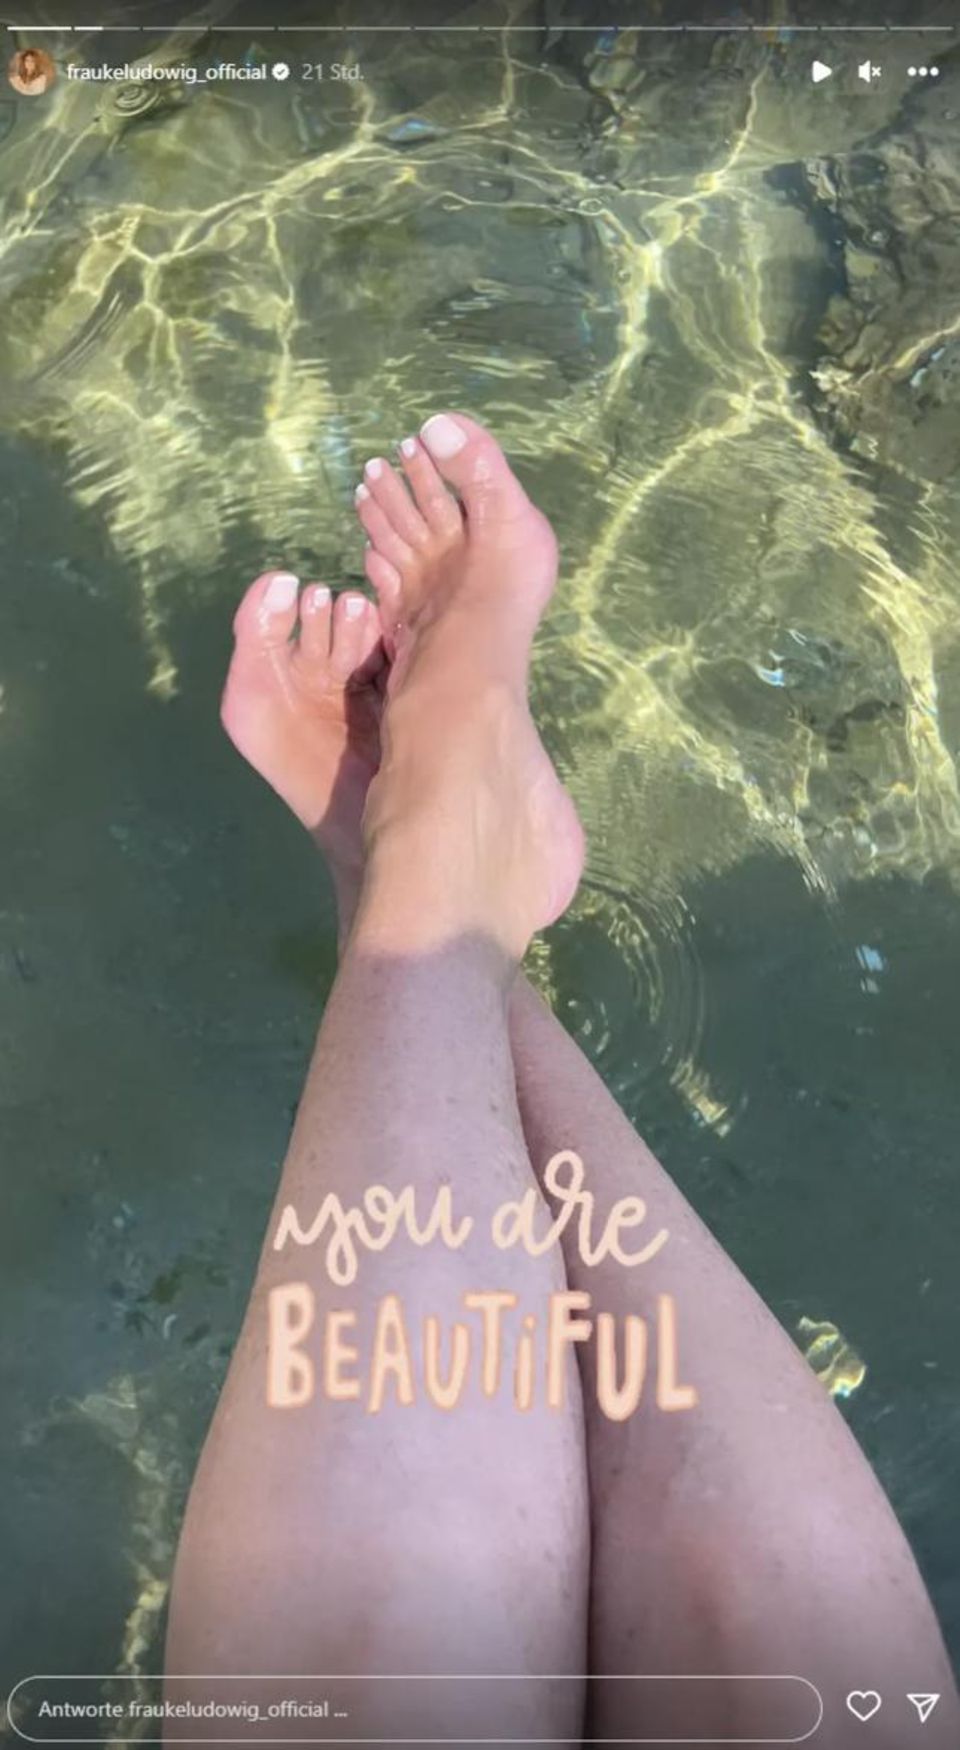 Despite criticism, Frauke Ludowig shows her bare feet in the sea off Greece. 